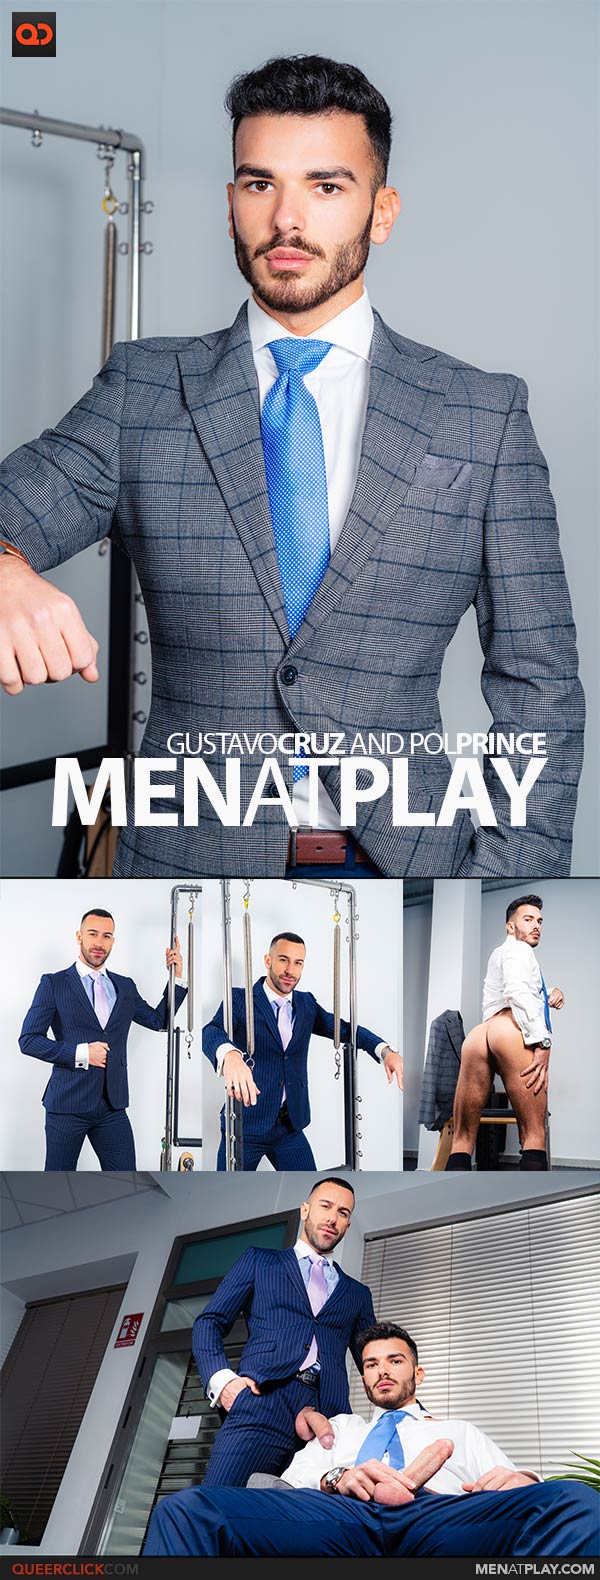 MenAtPlay: Gustavo Cruz and Pol Prince